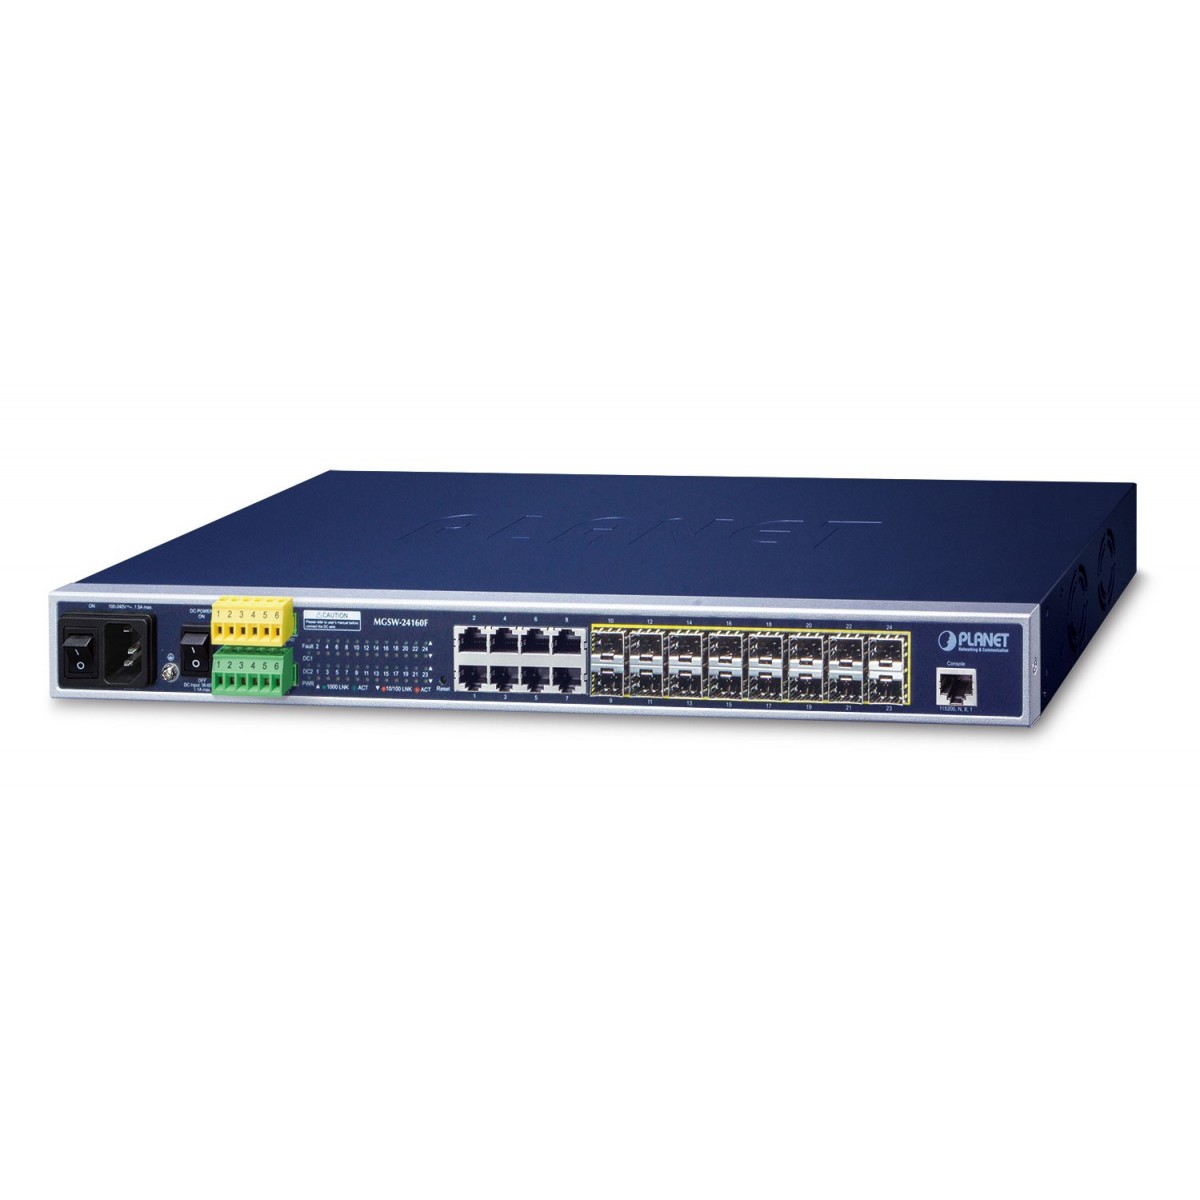 Planet MGSW-24160F - Managed - L2+ - Gigabit Ethernet (10/100/1000) - Power over Ethernet (PoE) - Rack mounting - 1U